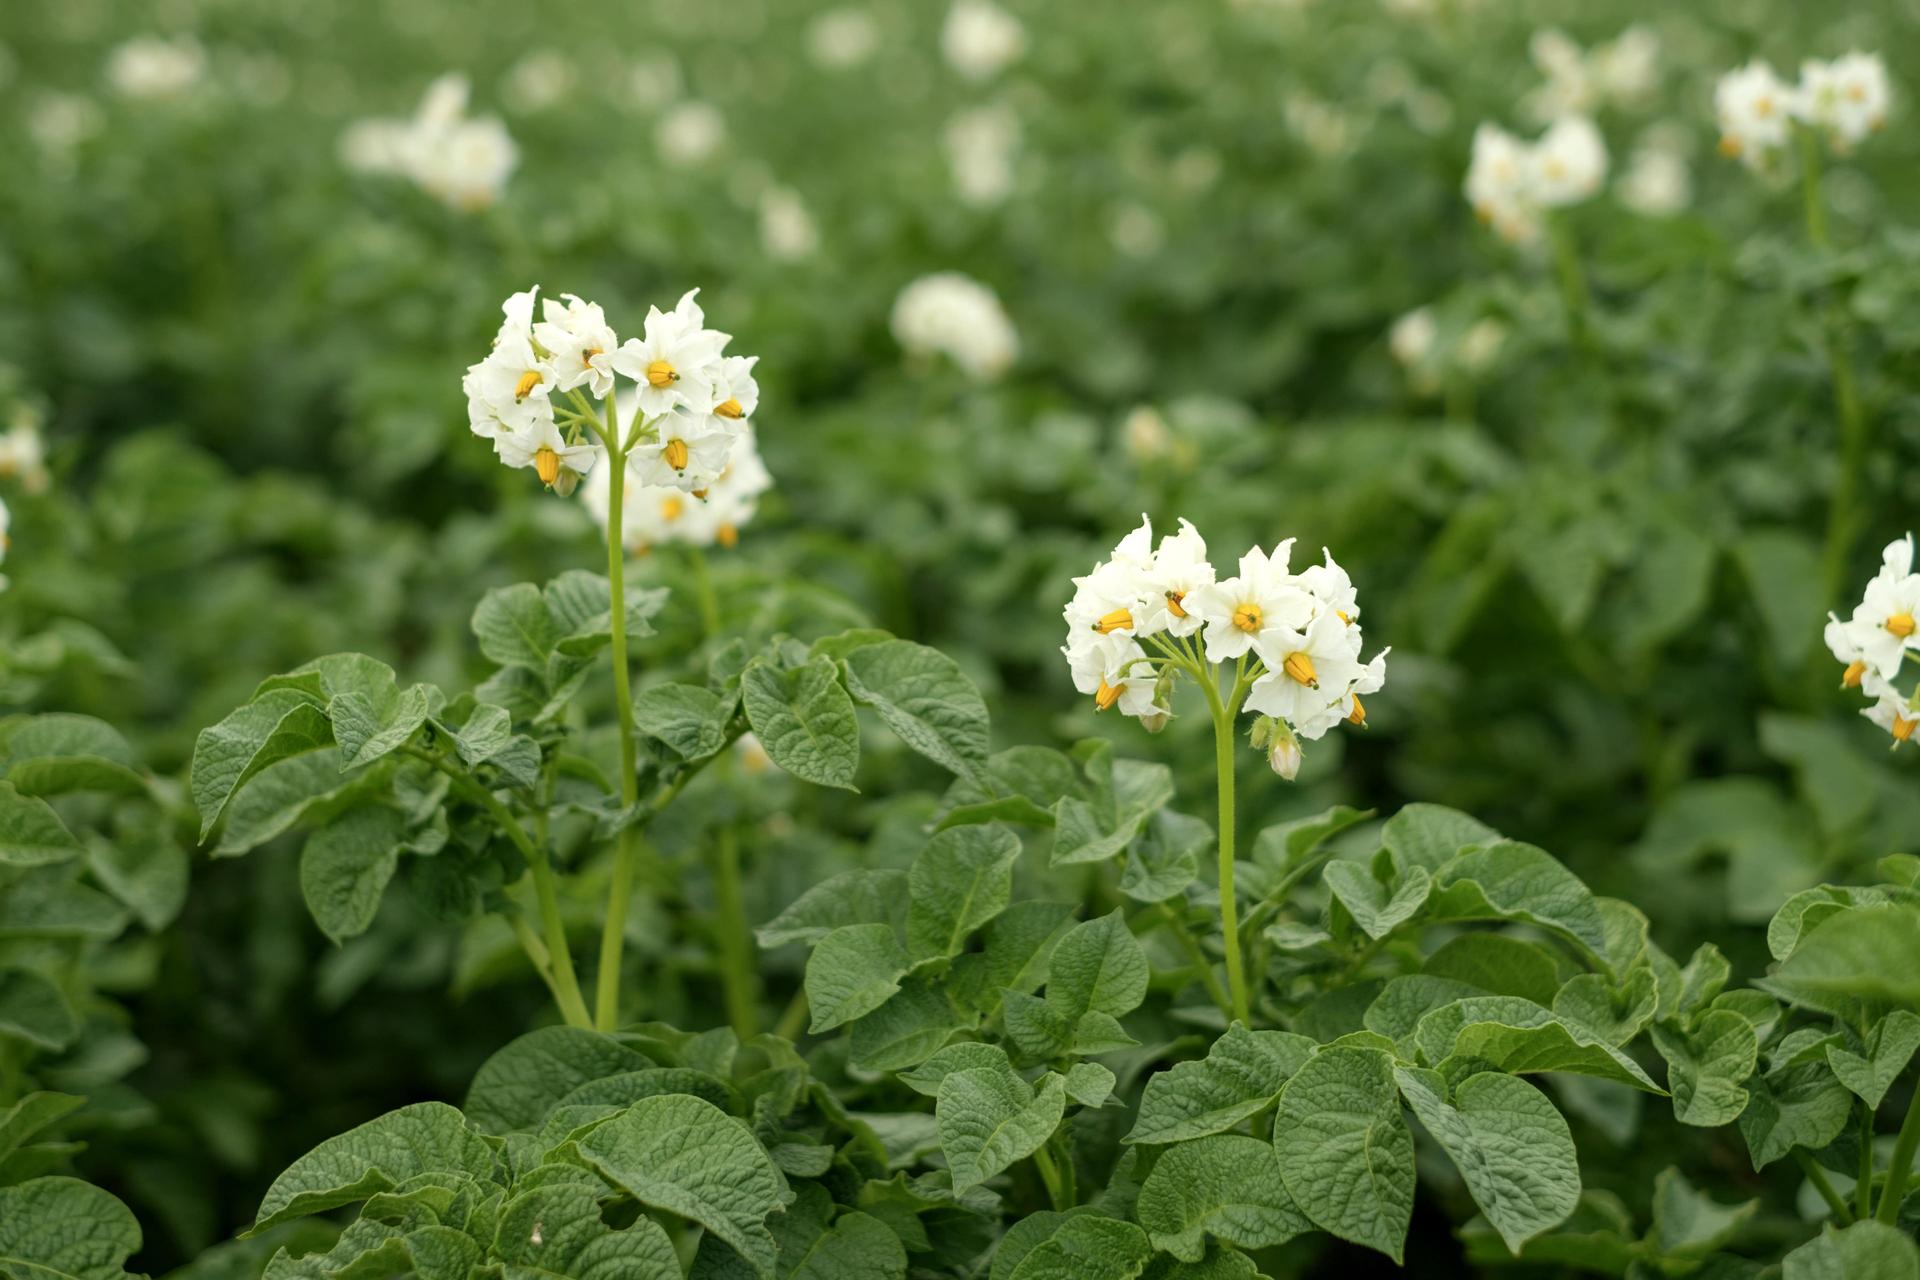 Potato Plant with White Flowers